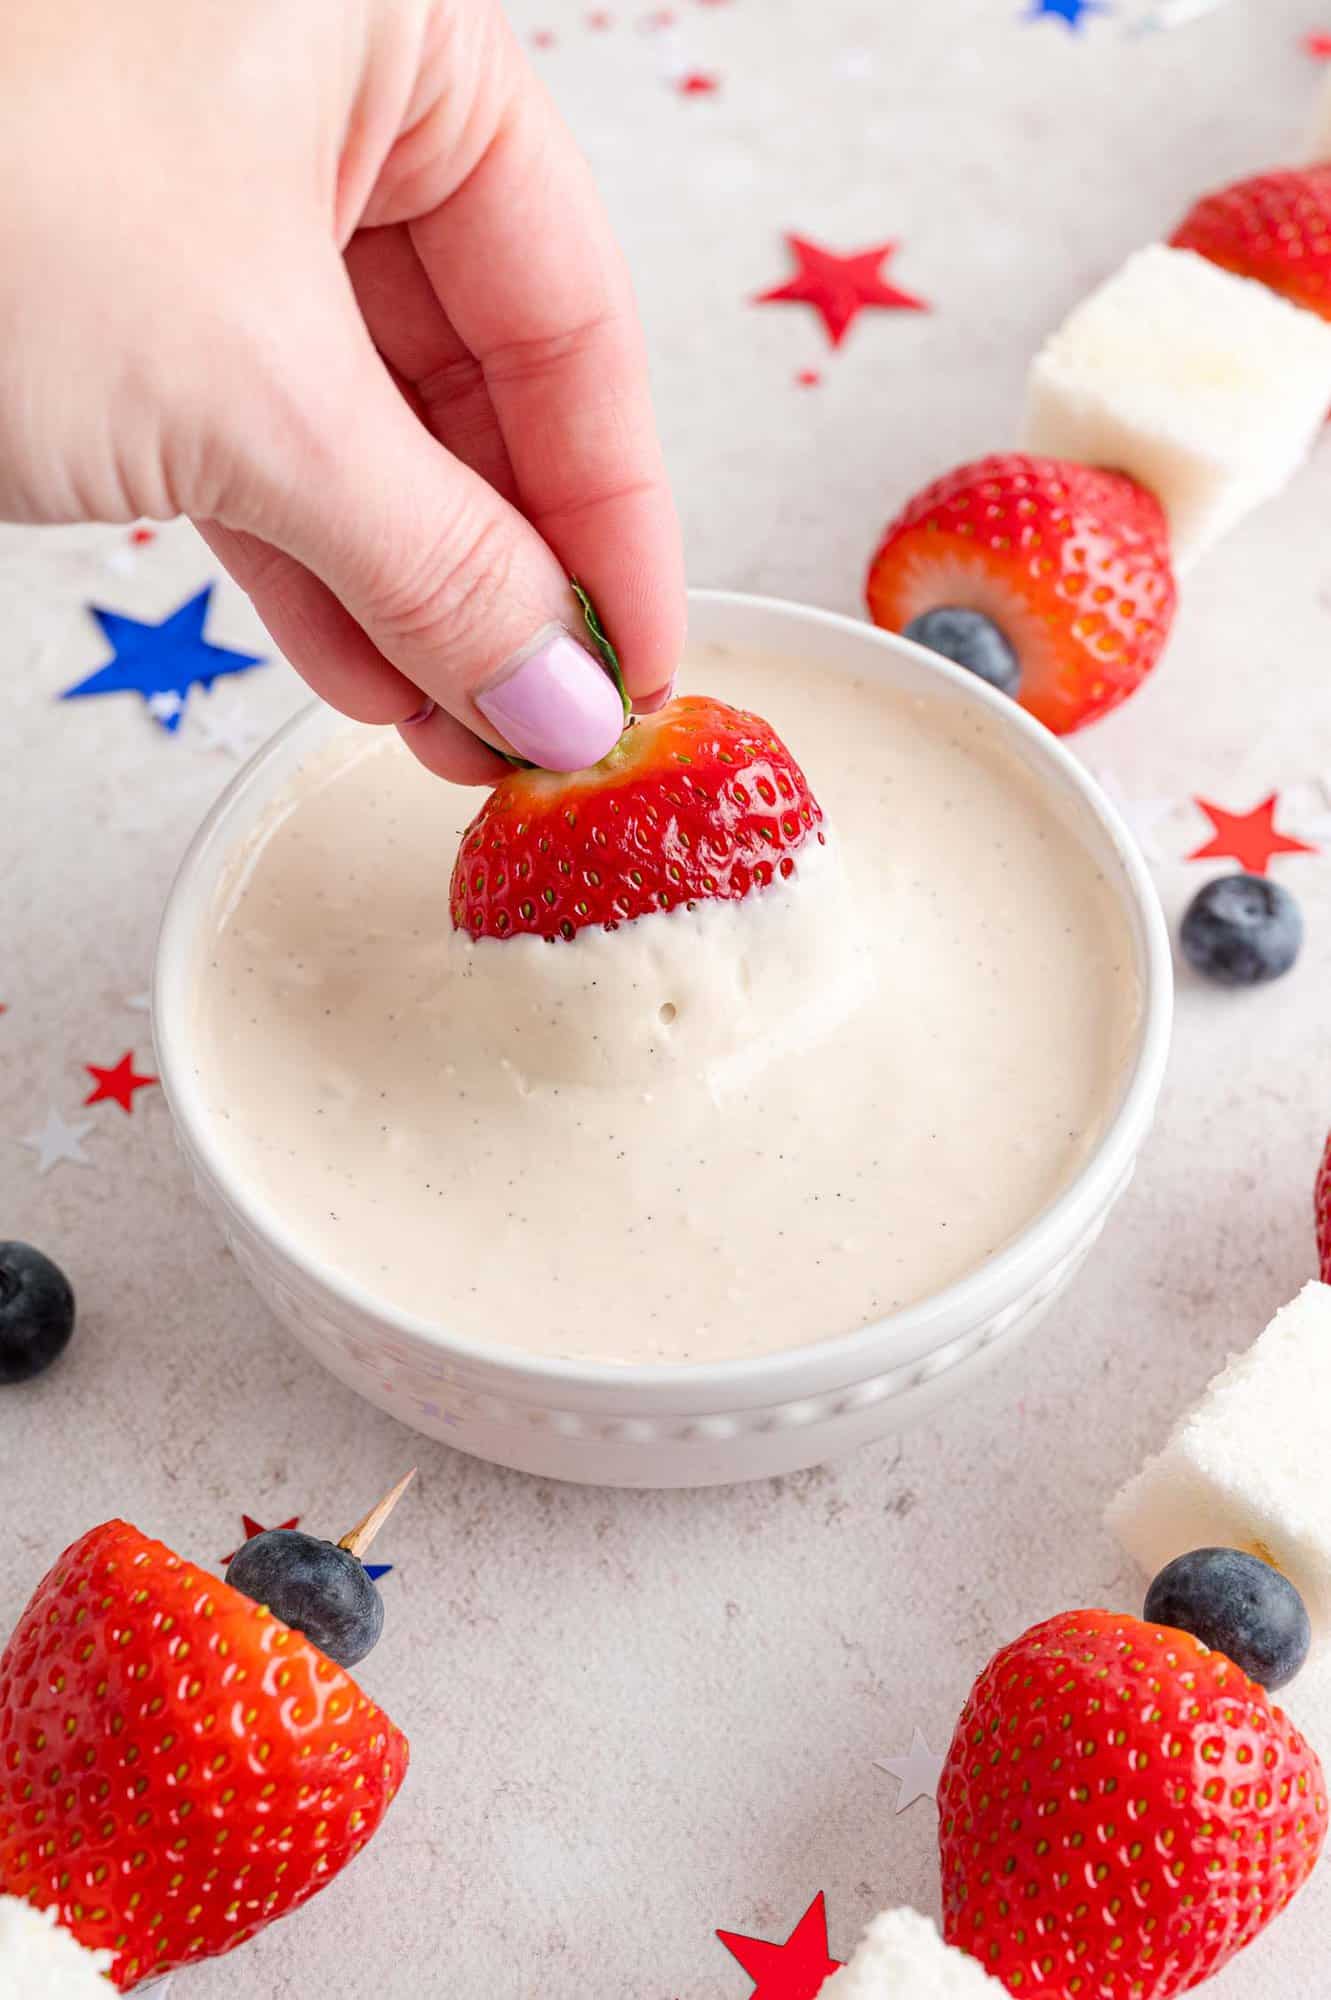 Strawberry being dipped in yogurt dip.